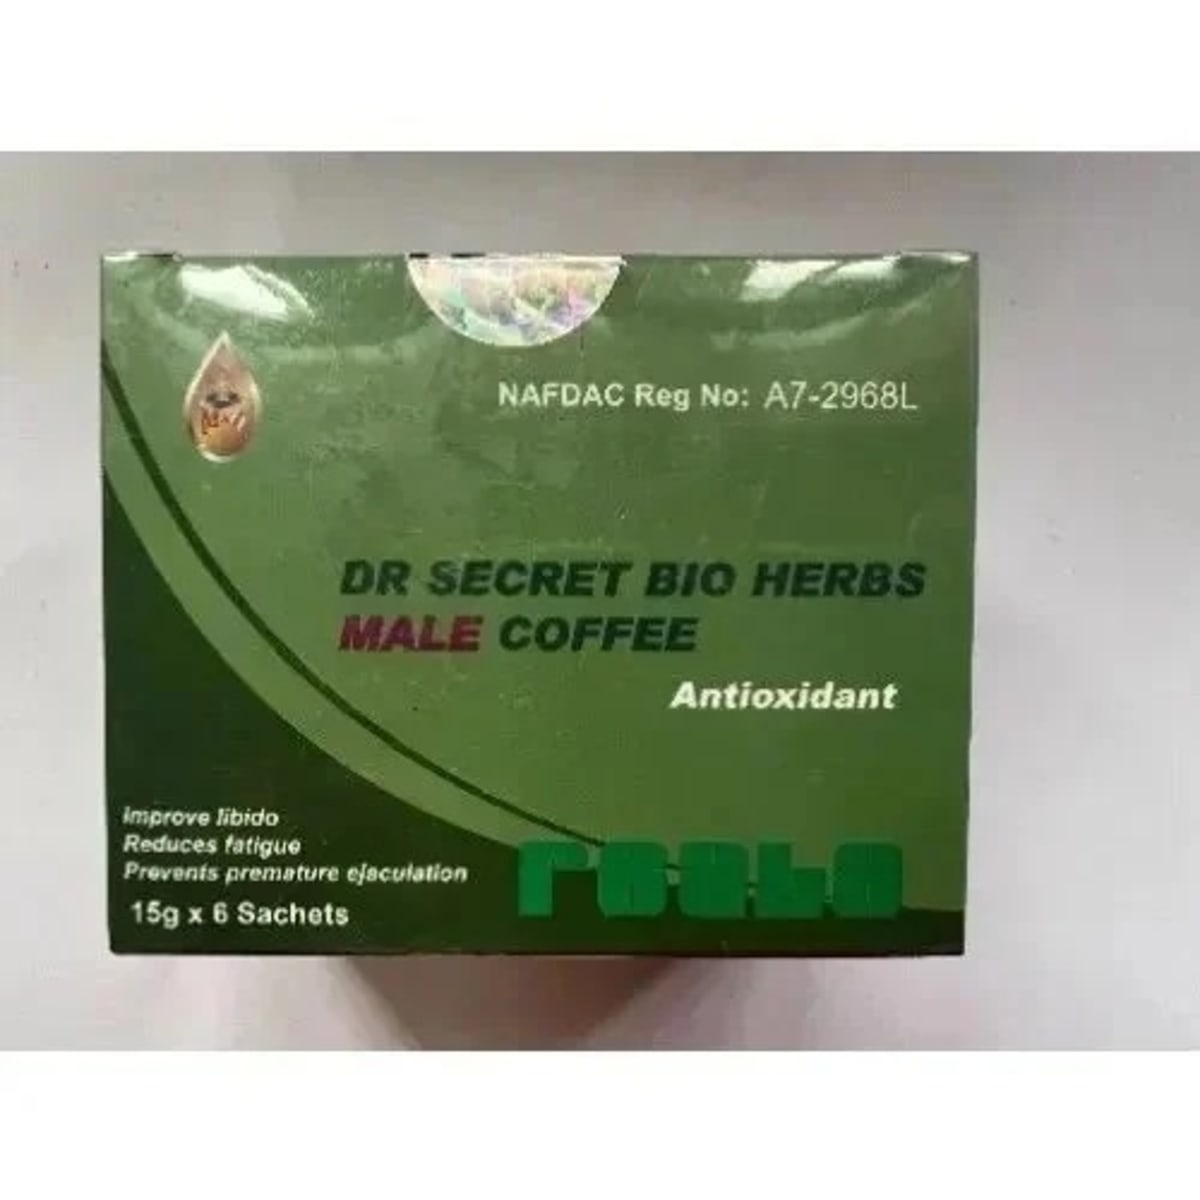 DR'S SECRET BIO HERBS COFFEE FOREVER YOUNG - Bio Herbs Coffee Nigeria LTD